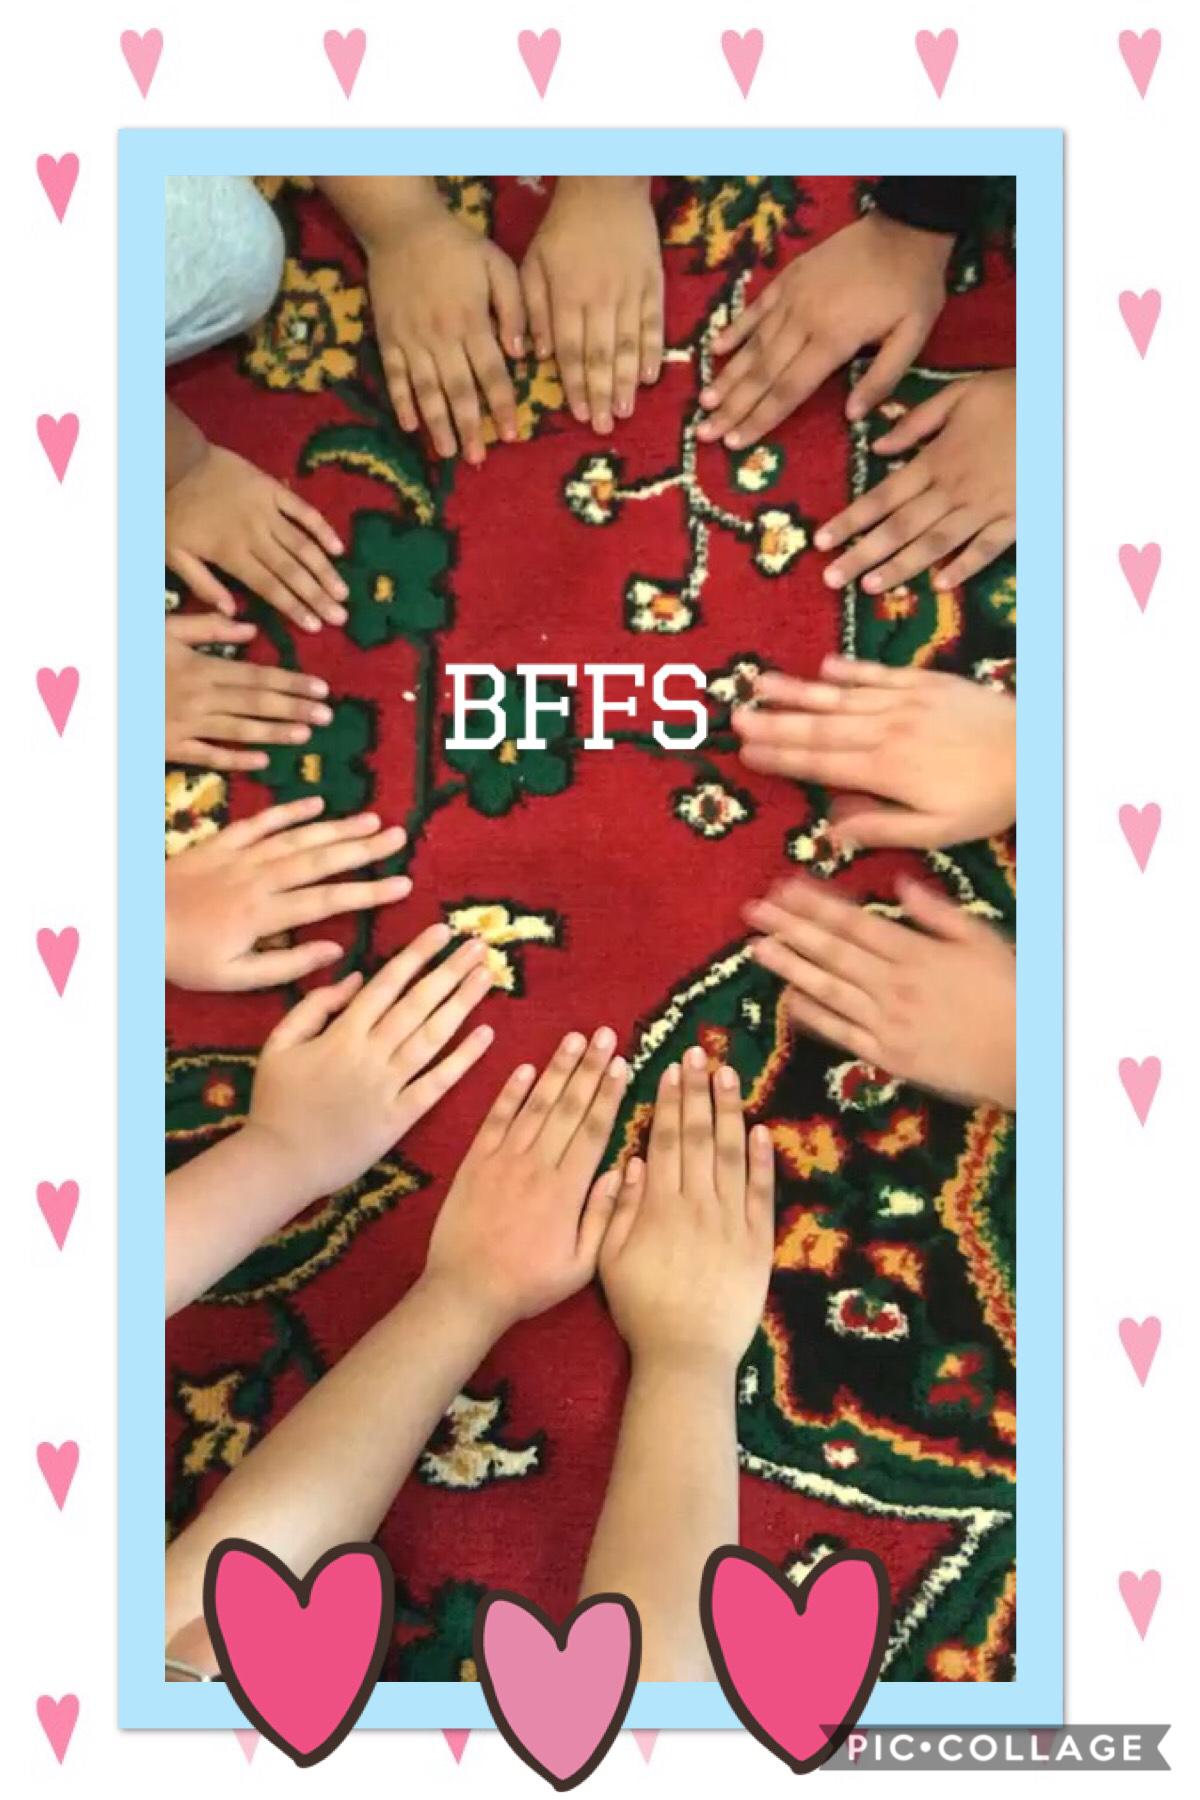 Tap 
Beast friends forever 
At school
I love u BFFs ❤️ 
